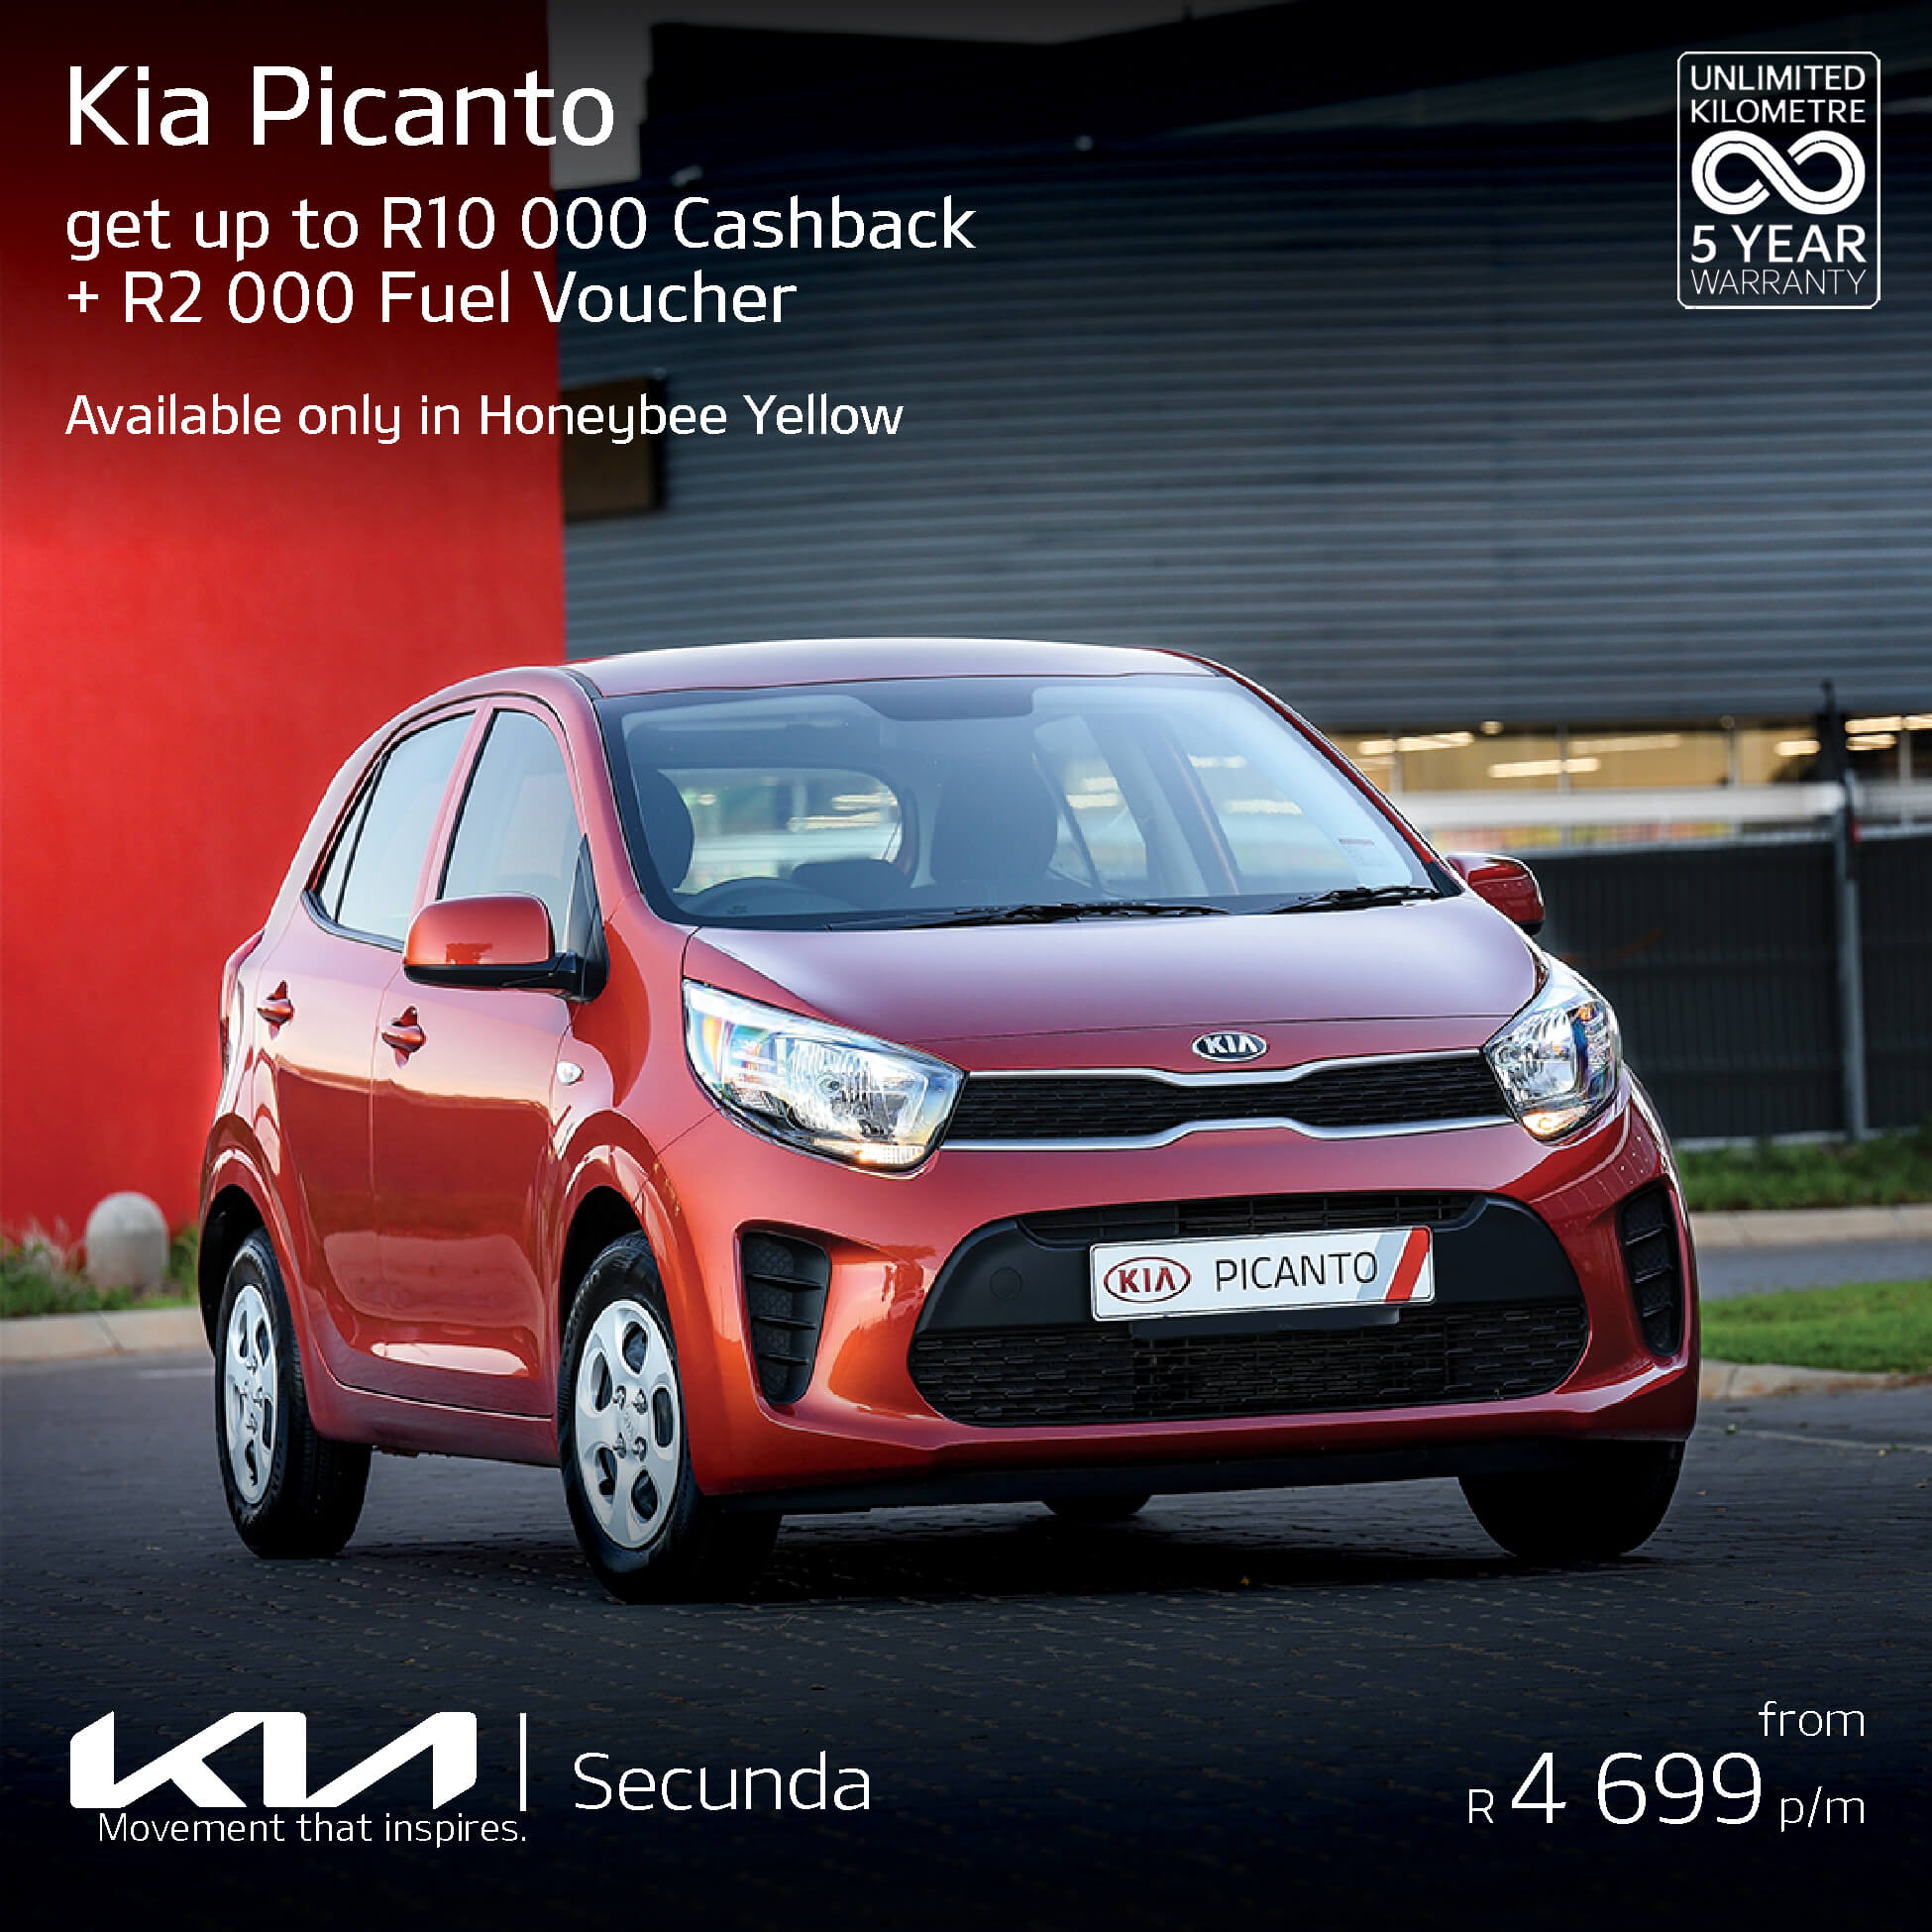 Kia Picanto image from Eastvaal Motors